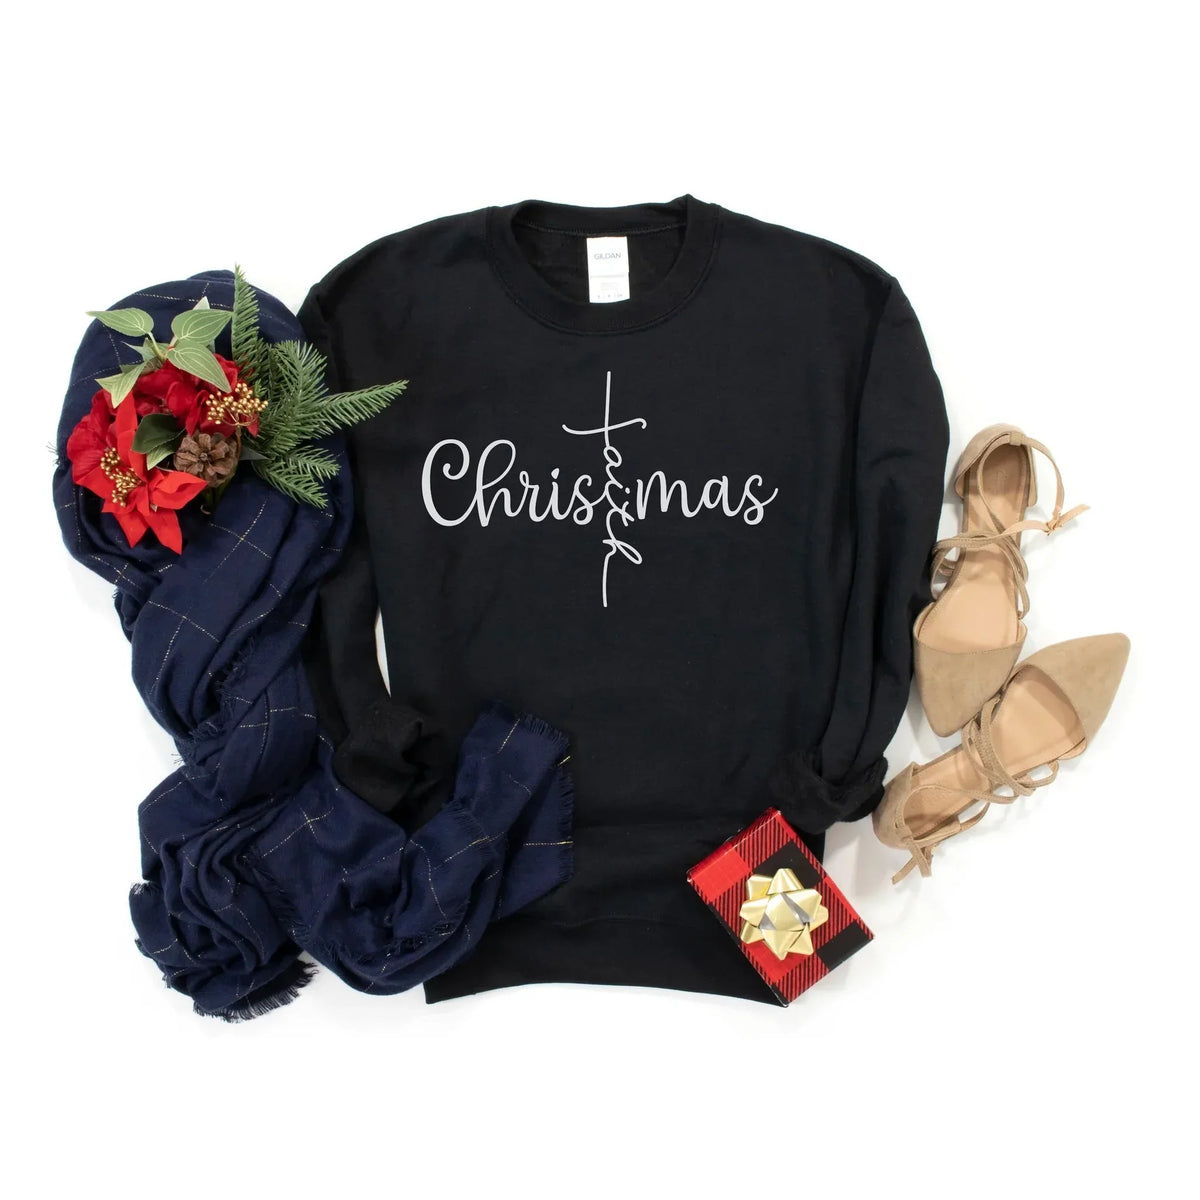 Christmas Faith Sweatshirt/tee options.